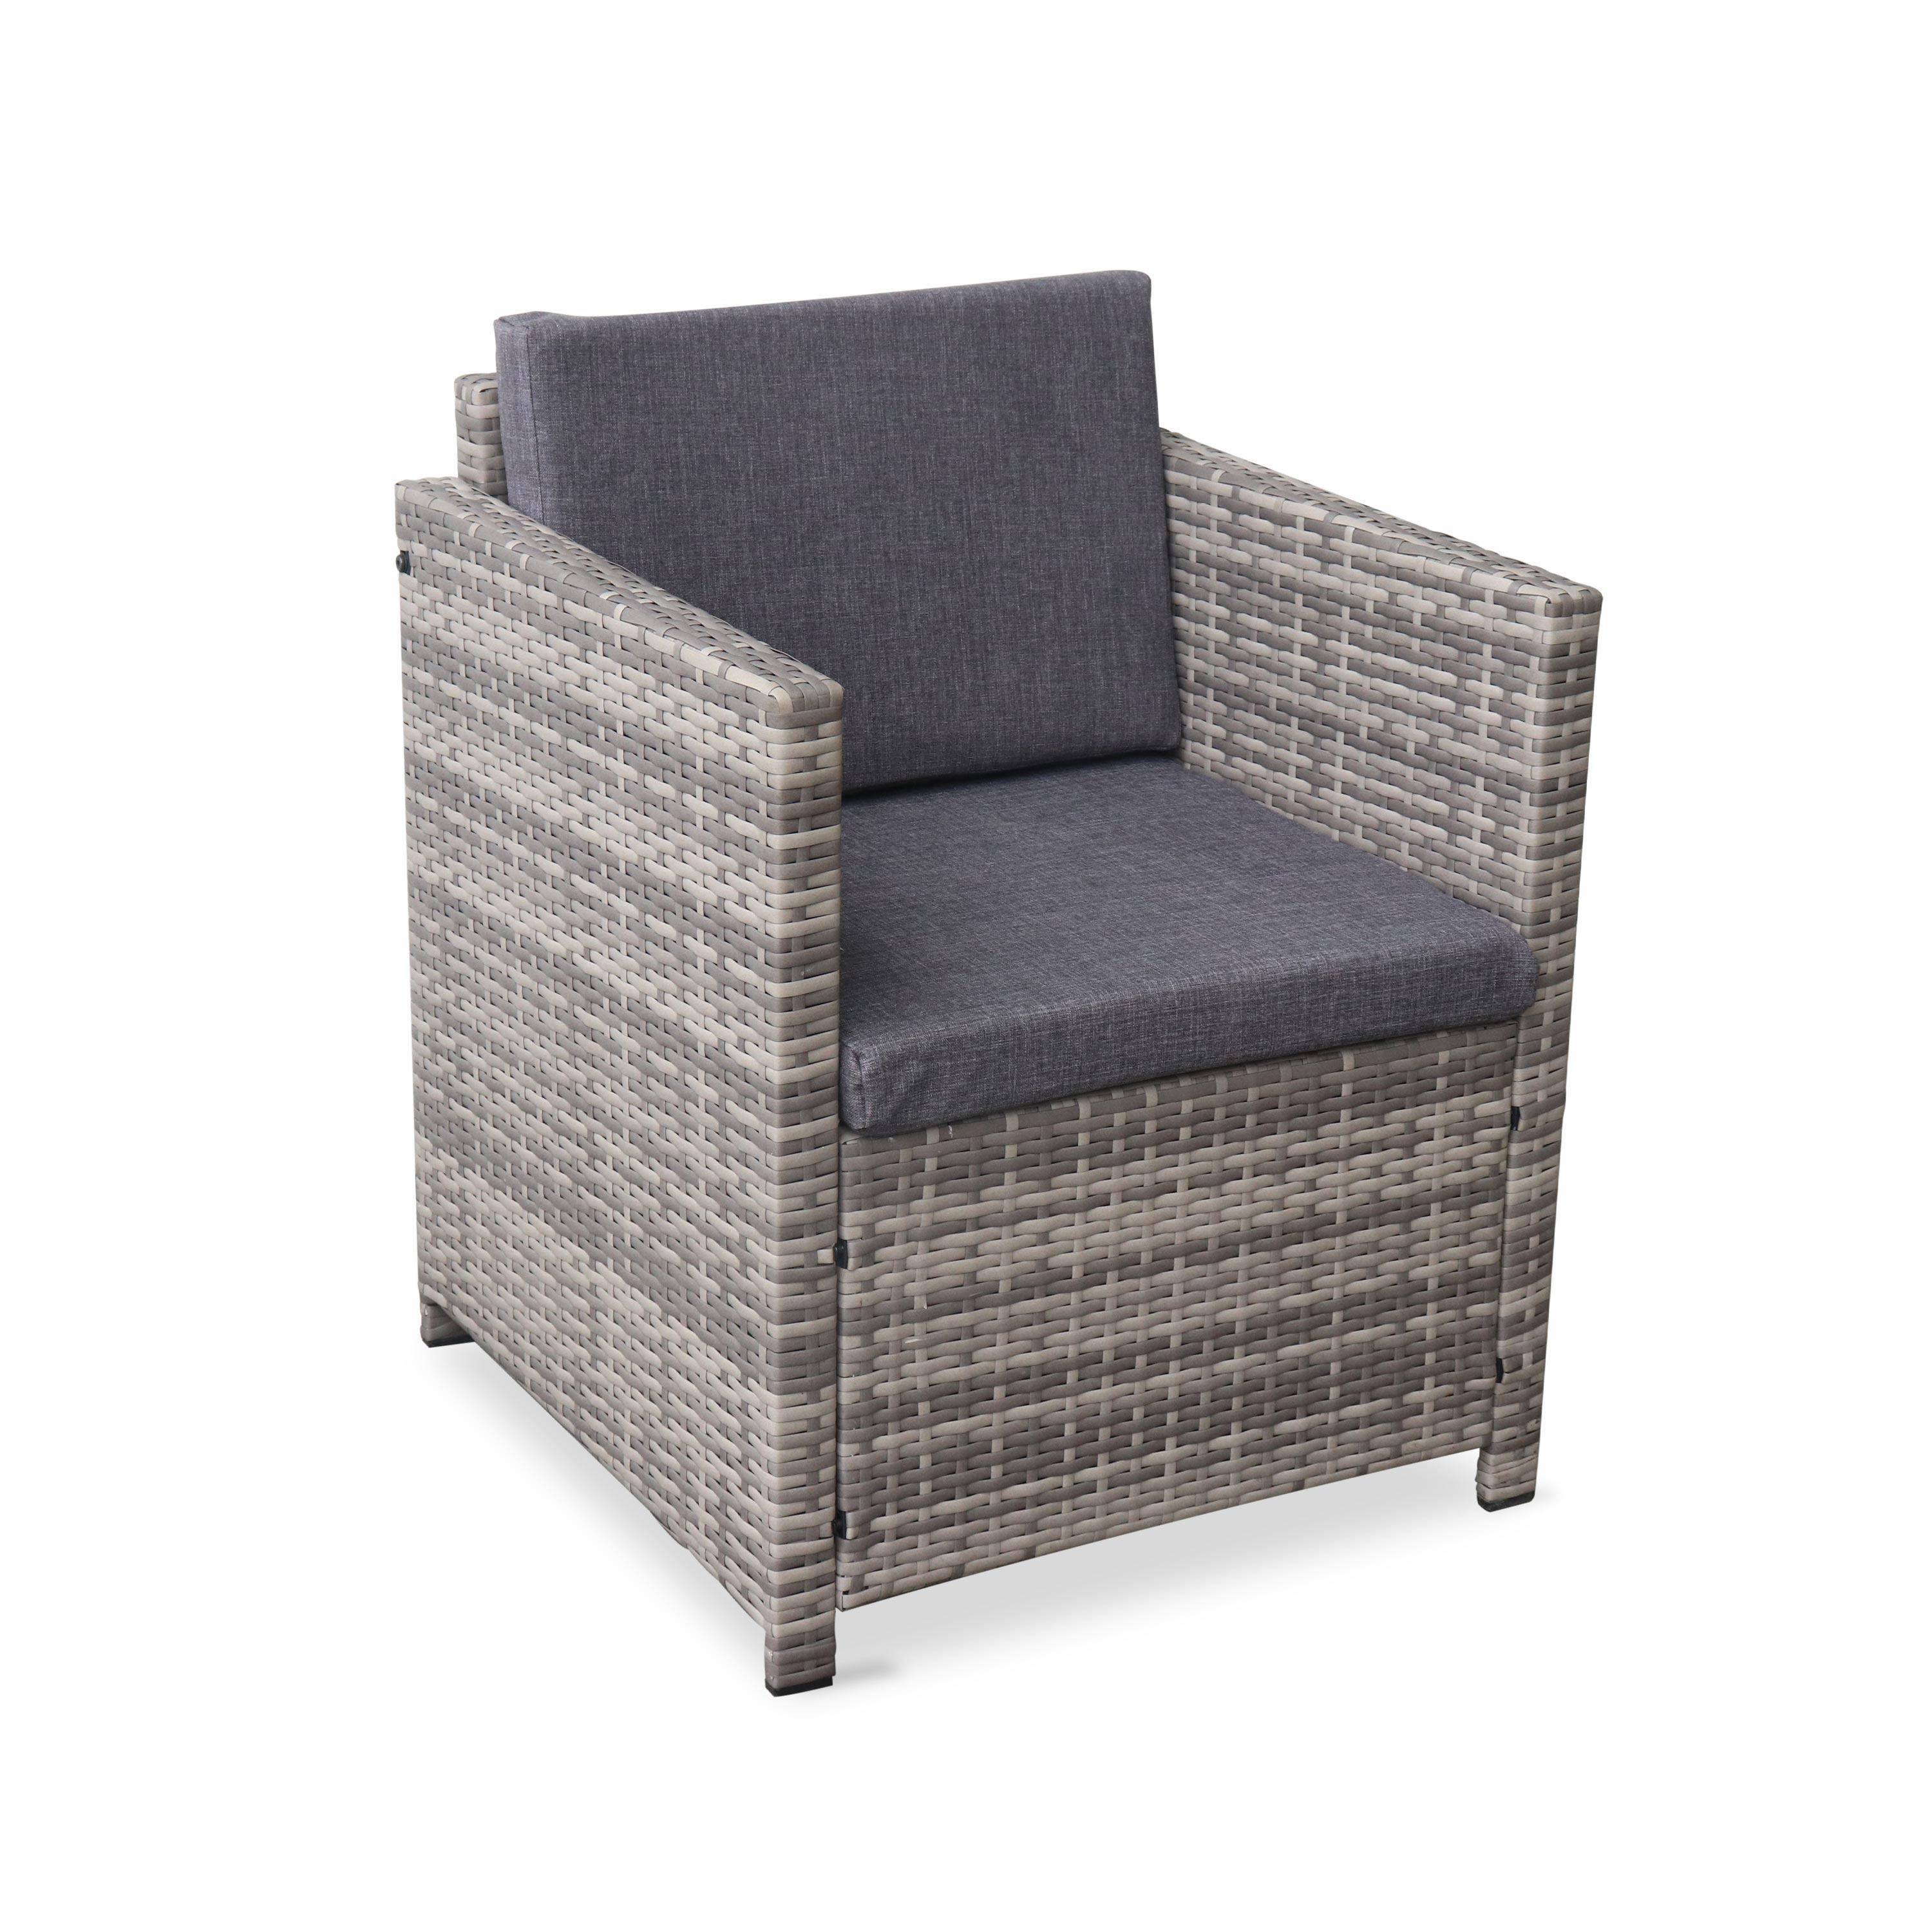 4-seater polyrattan garden sofa set - sofa, 2 armchairs, coffee table - Perugia - Mixed Grey rattan, Grey cushions,sweeek,Photo4